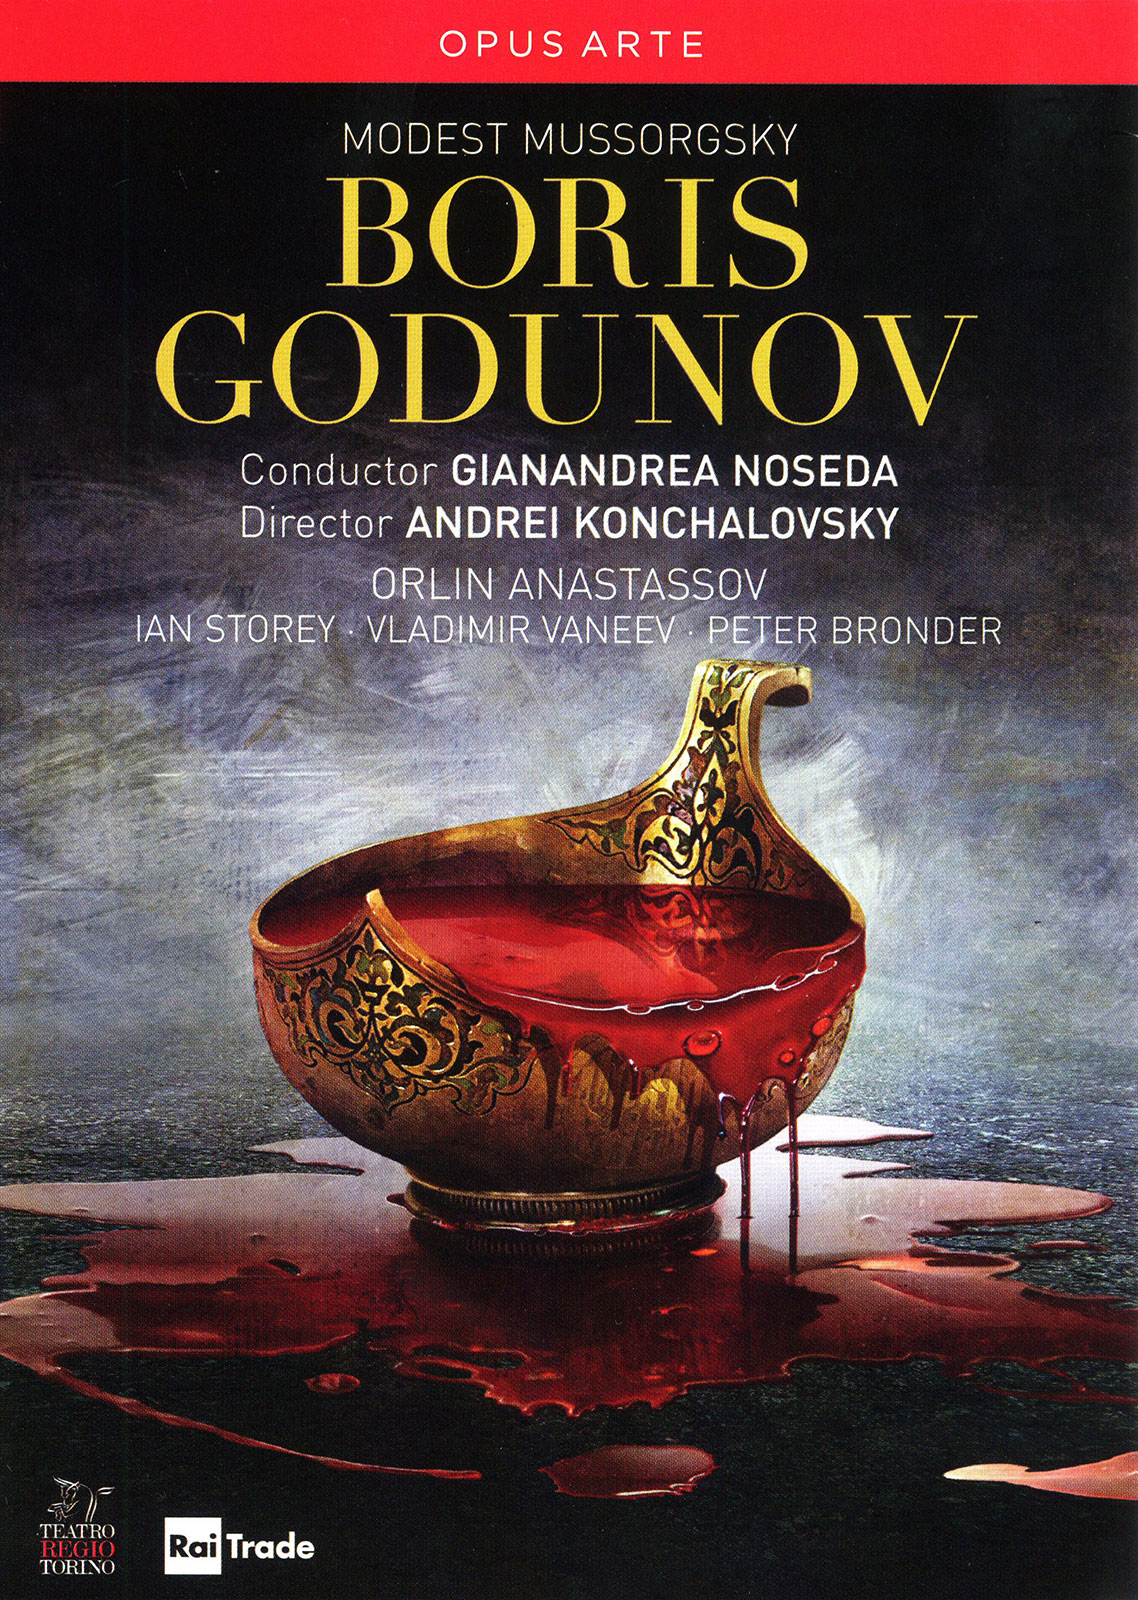 Boris Godunov by Modest Musorgskij - Season 2010-2011